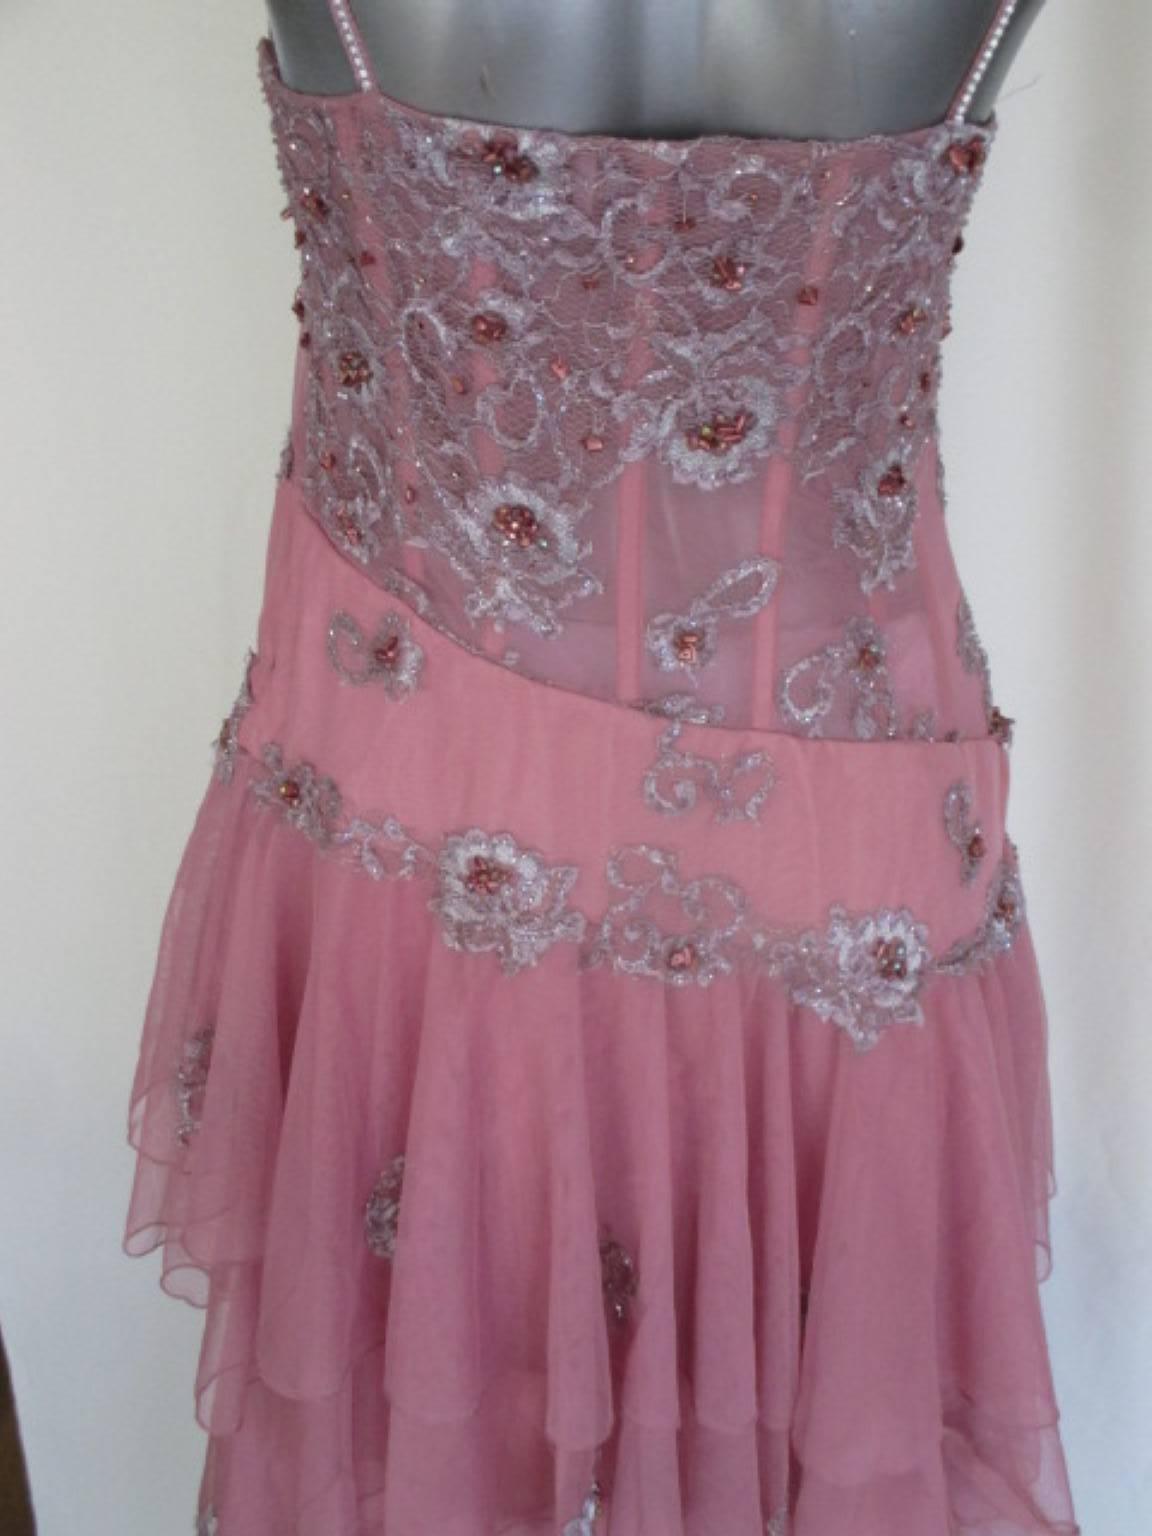 Pierre Cardin Pink Beaded Cocktail Dress 2